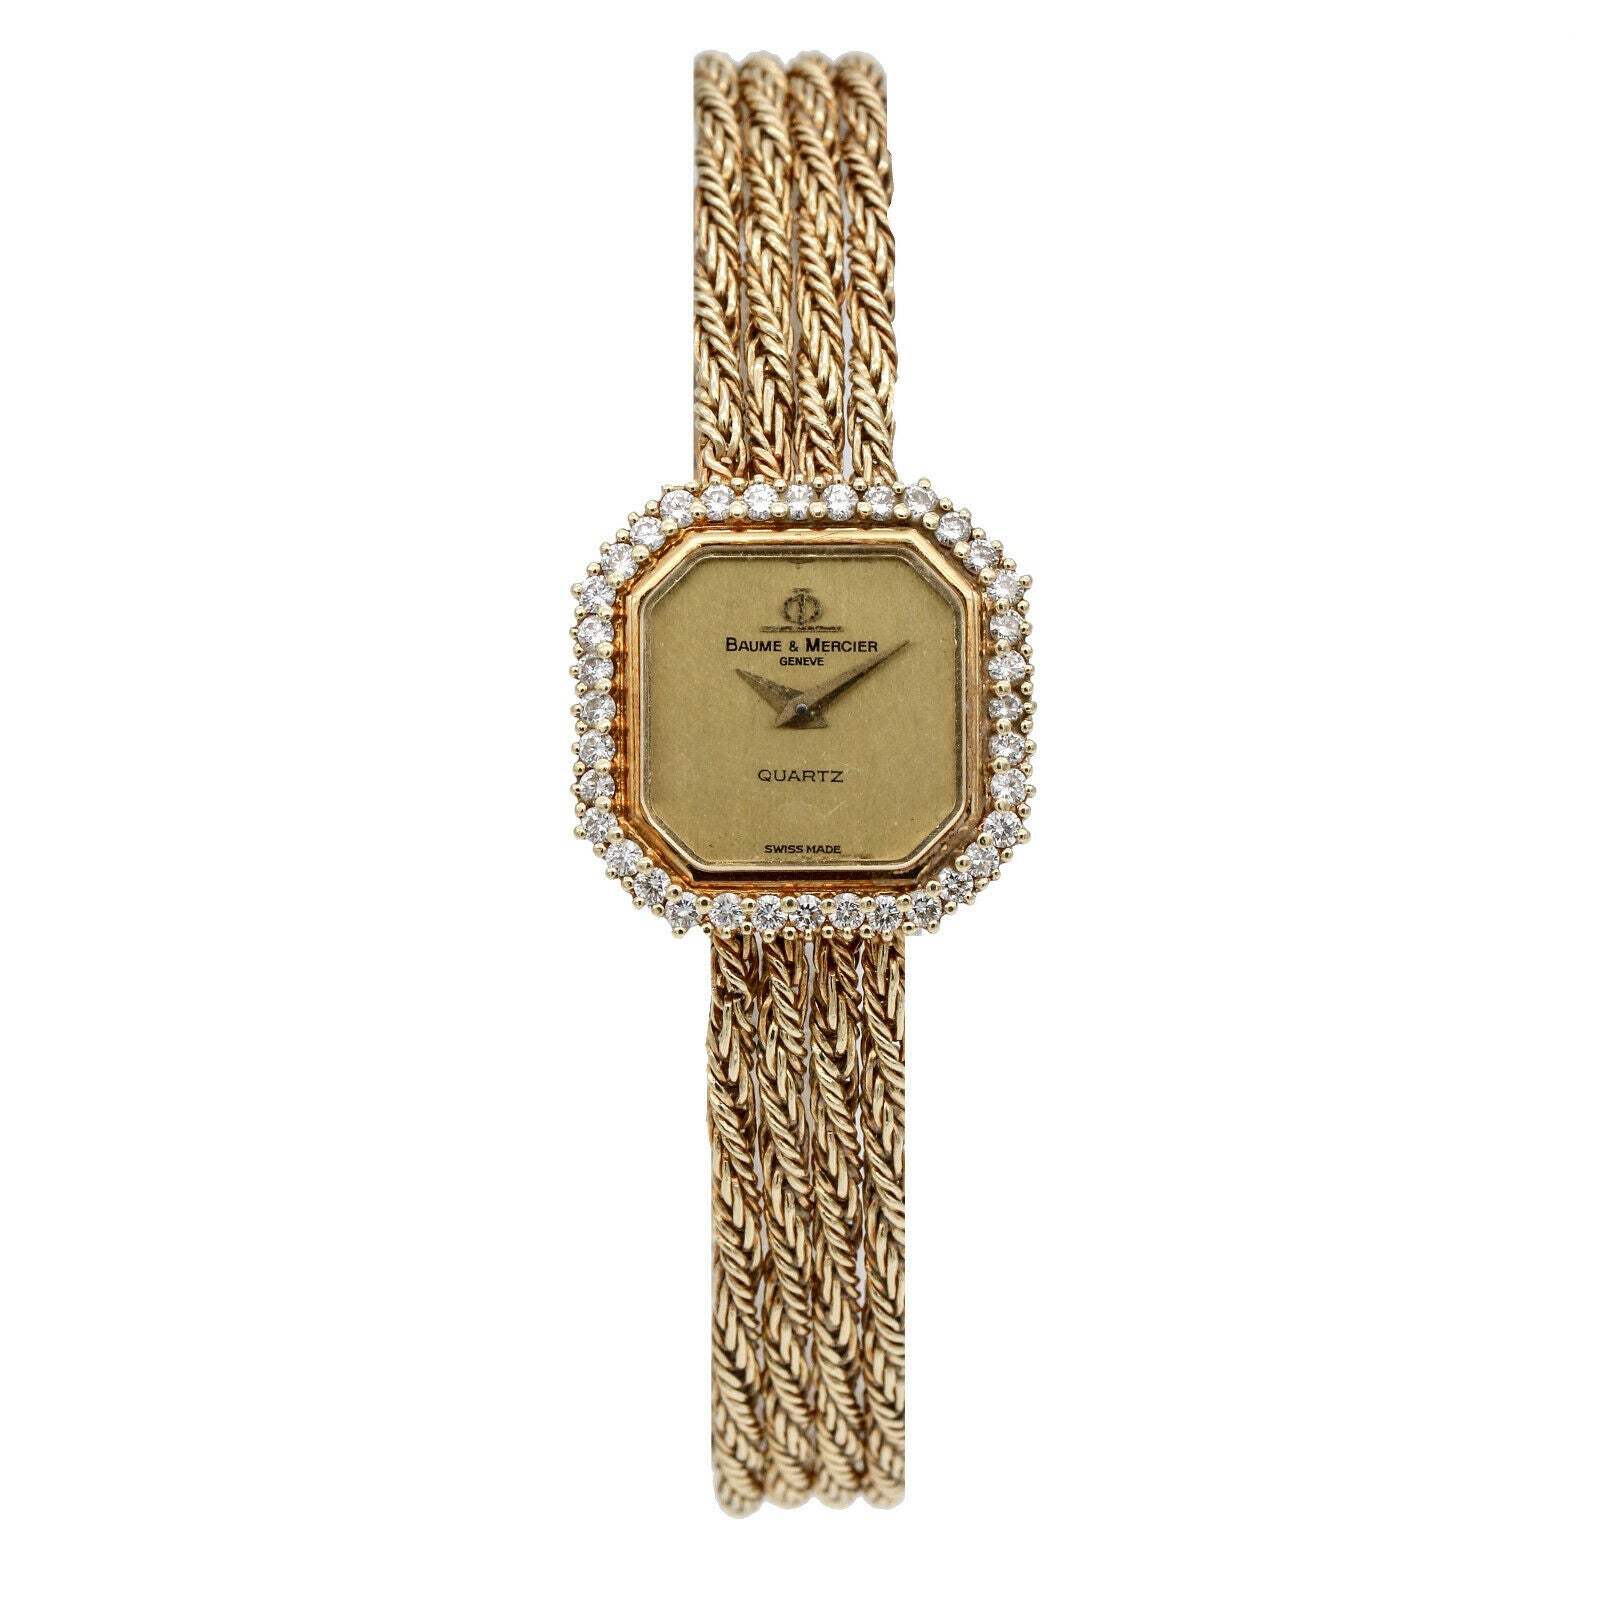 Baume & Mercier Vintage Women's 14k Gold Watch with Diamond